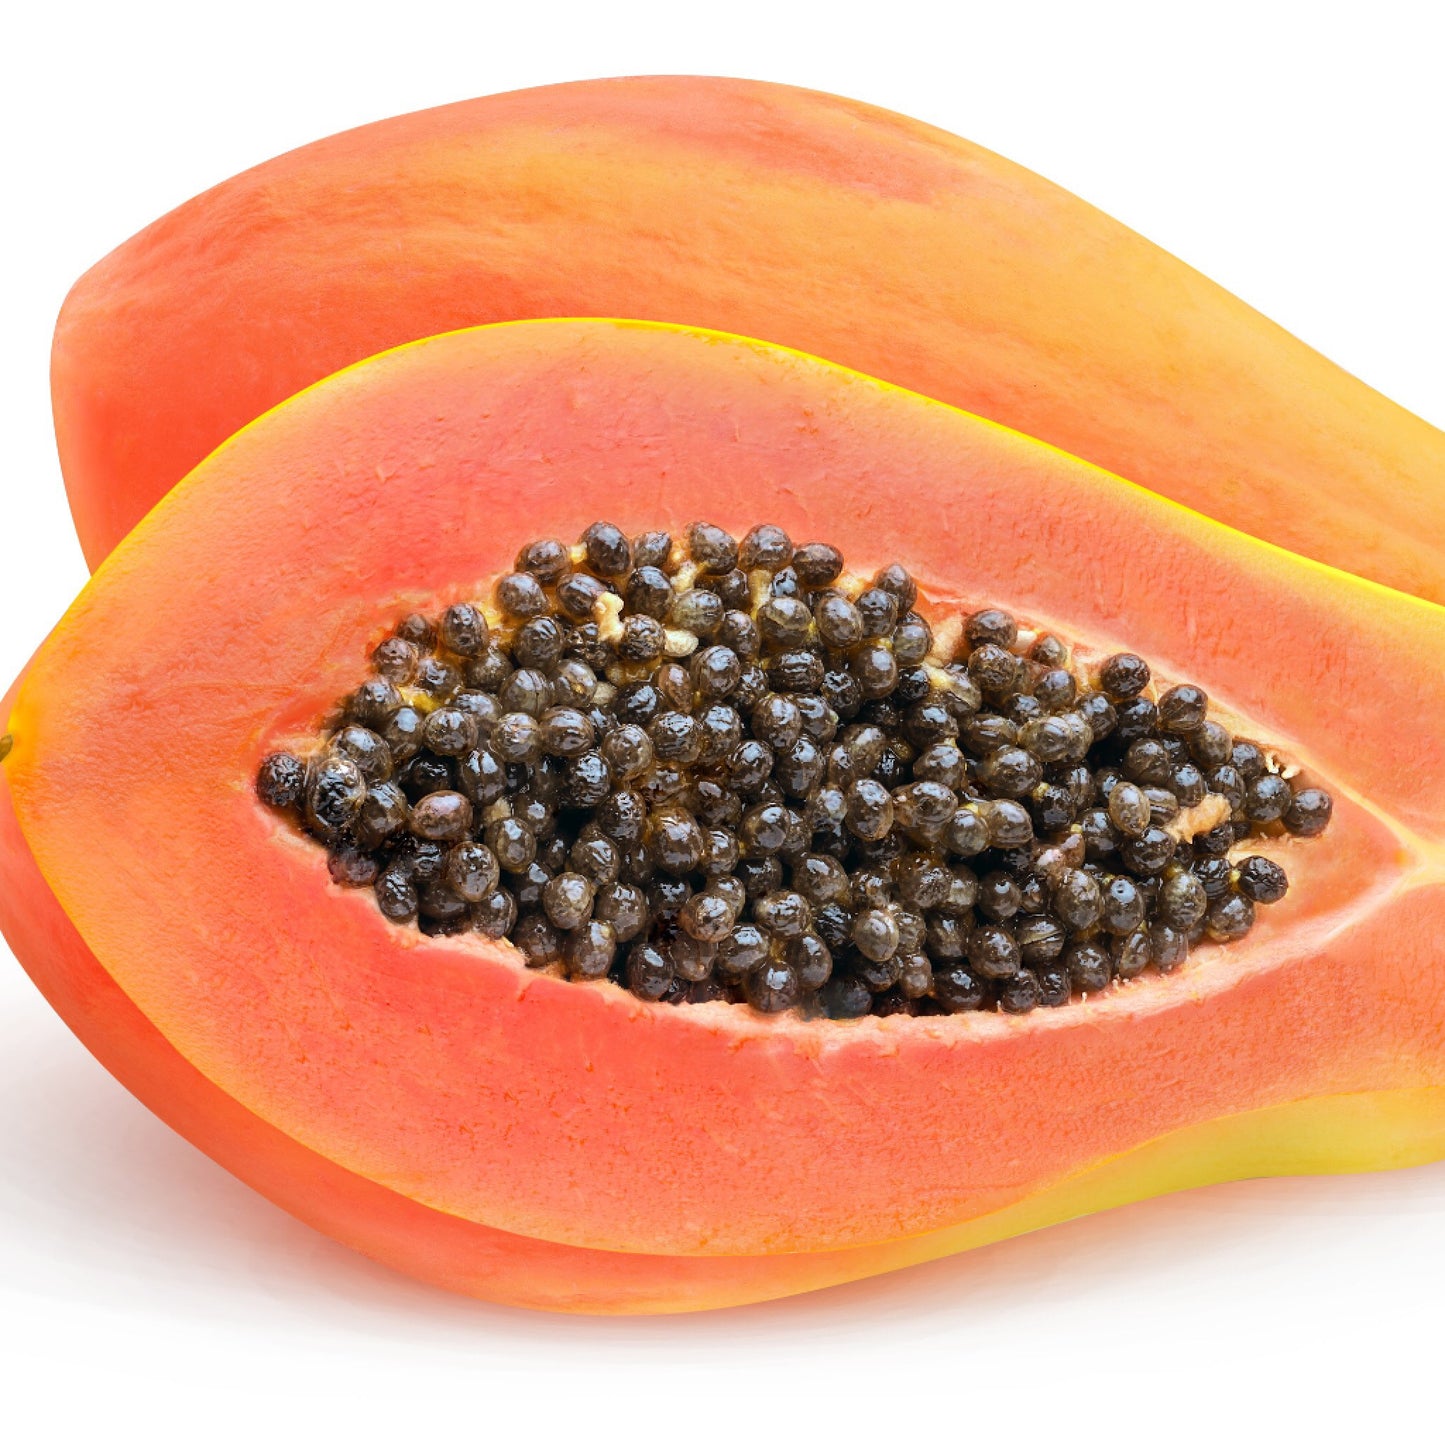 4 Papaya Seeds Extract - Four Ingredients